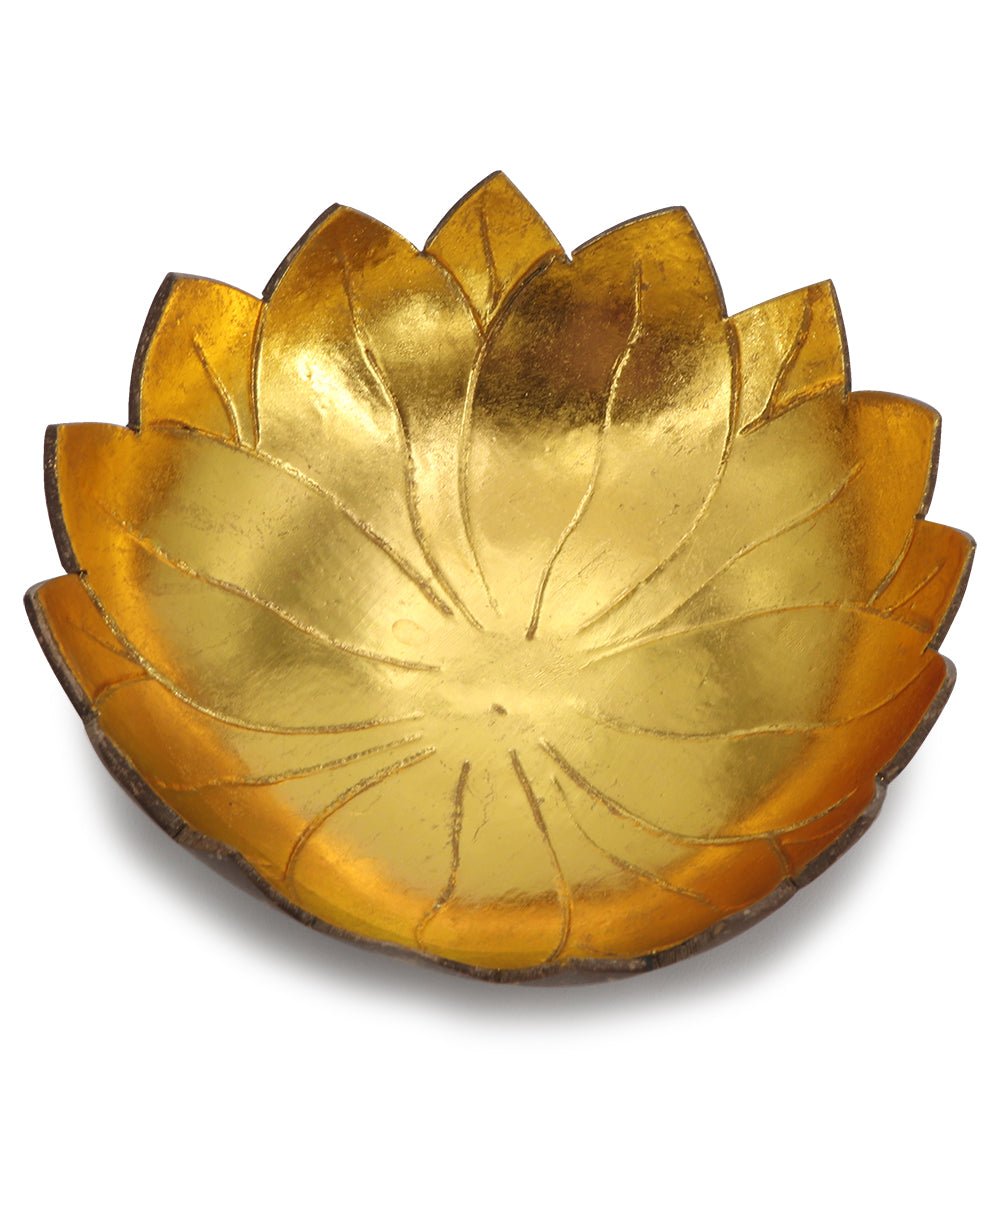 Gilded Lotus Shaped Coconut Decorative Bowl - Bowls